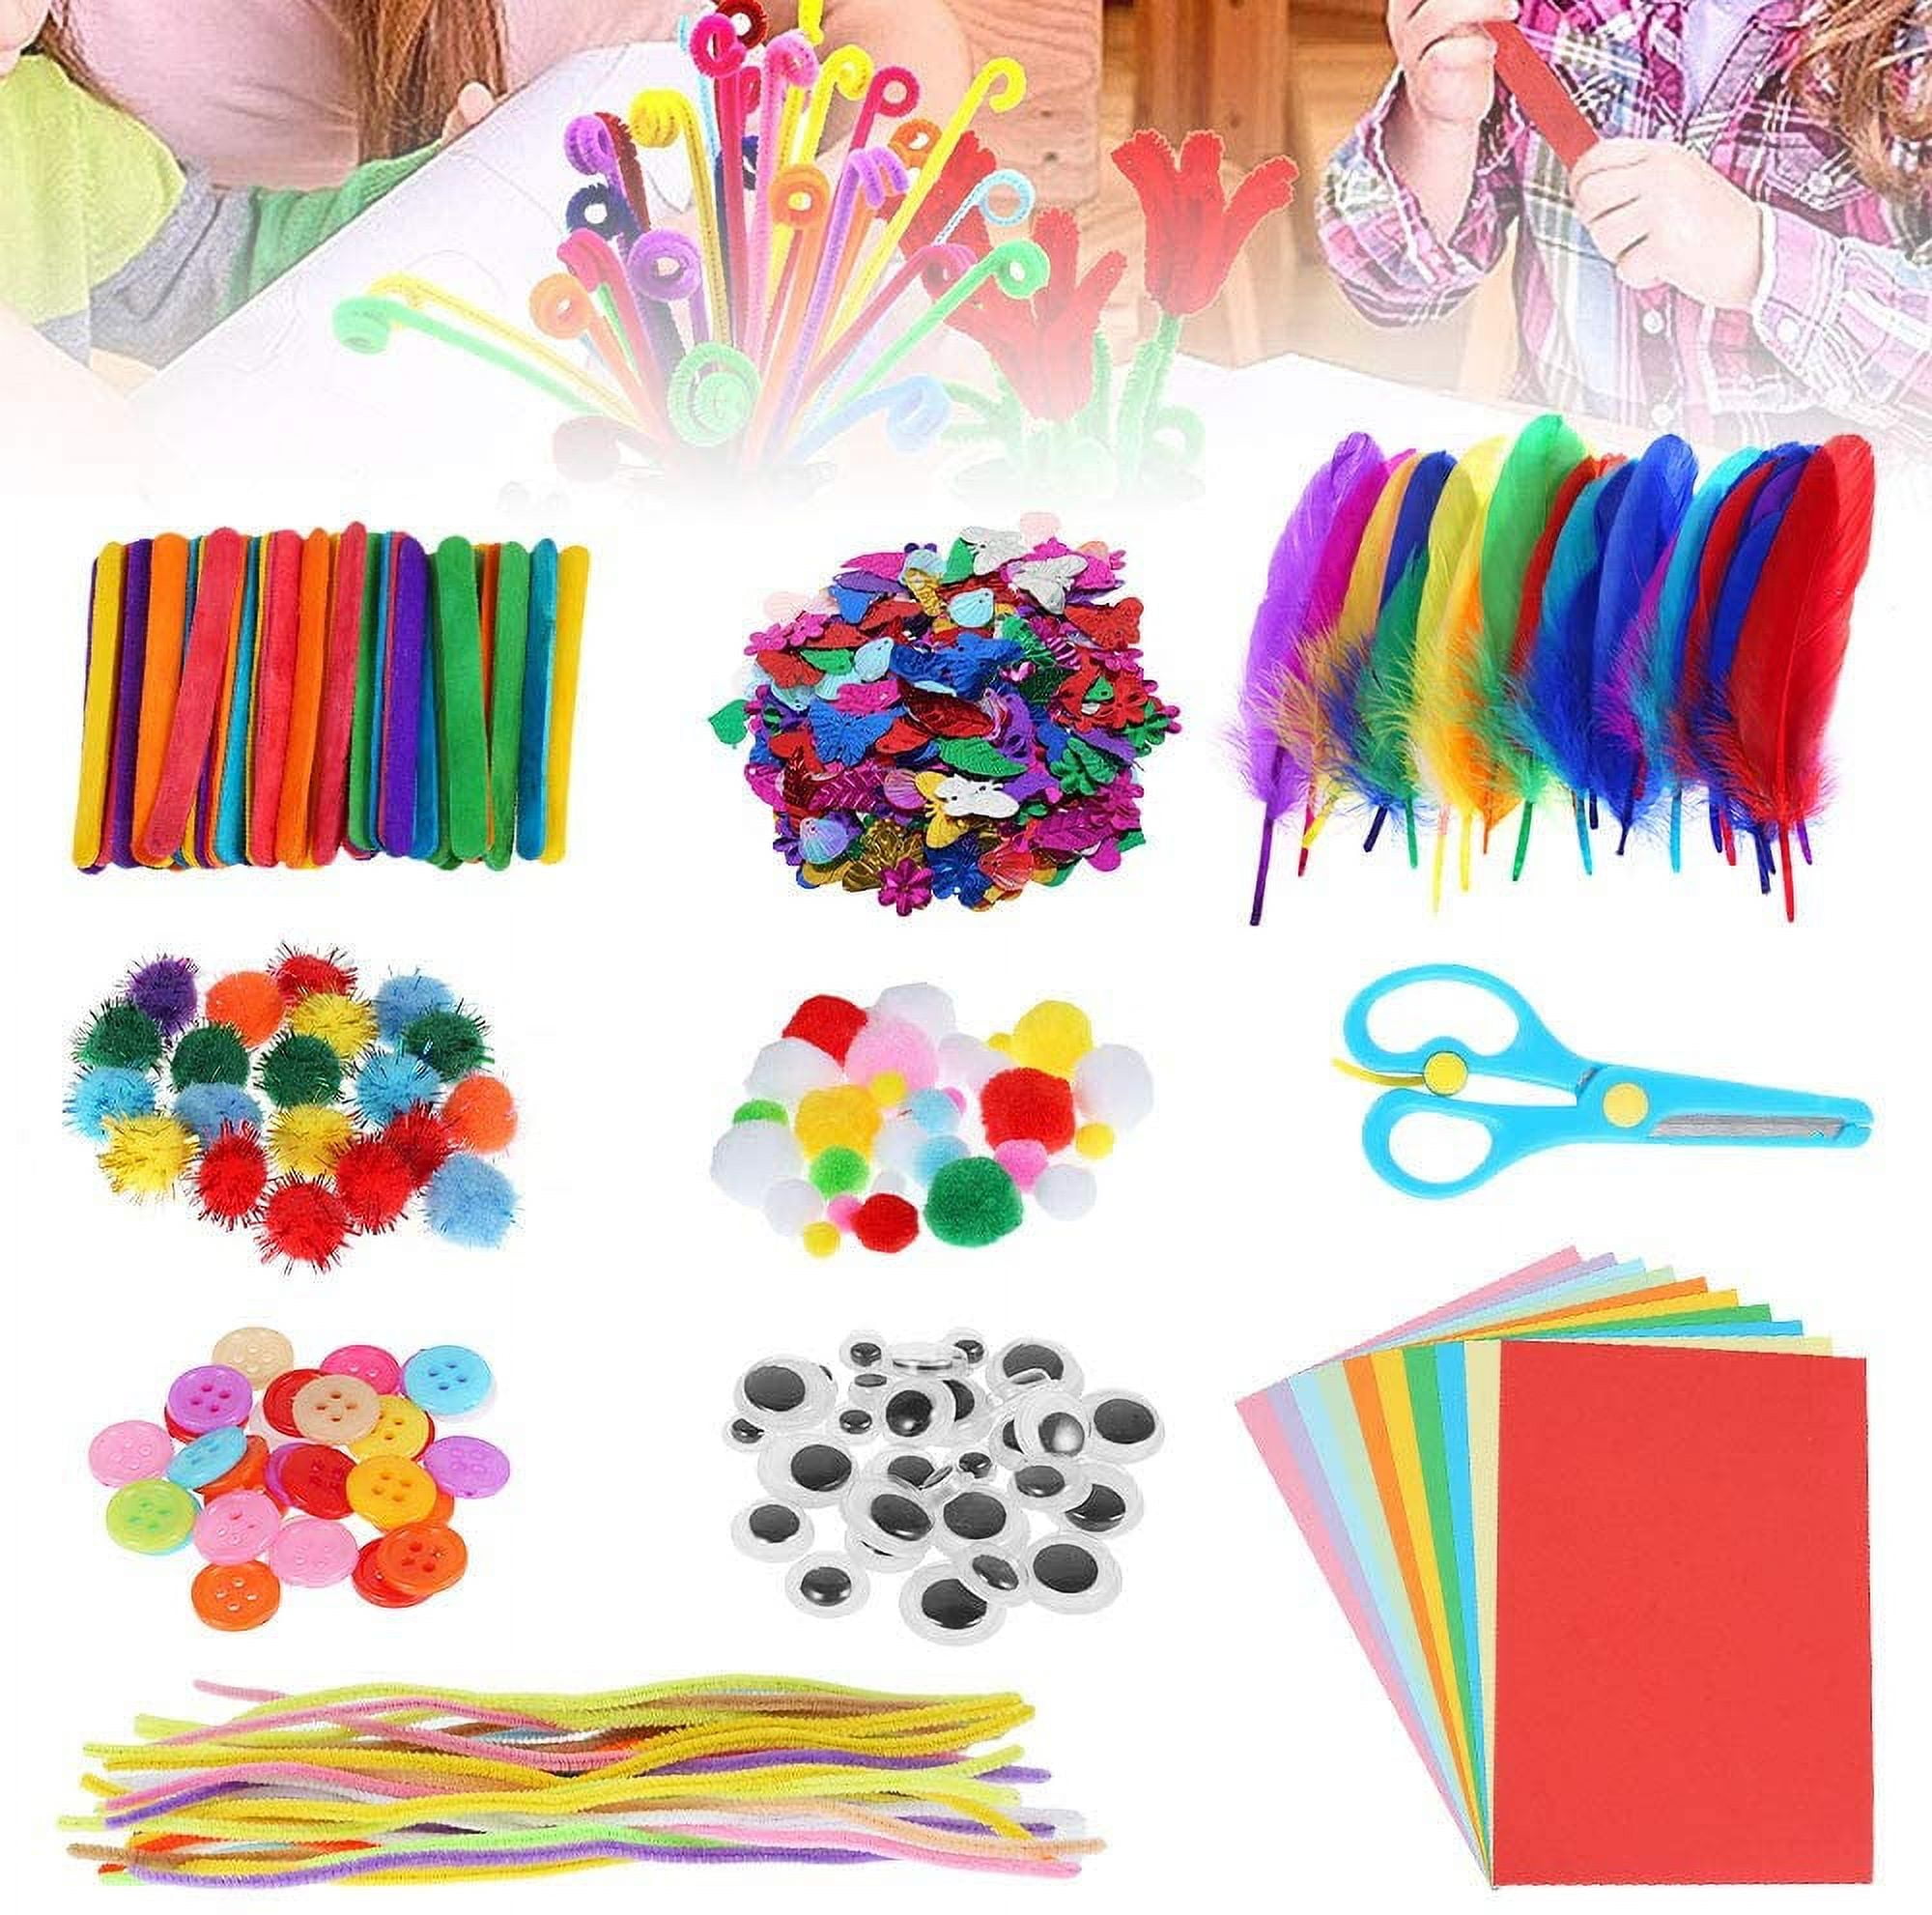 Crafts - Craft Embellishments - Chenille & Pom Poms - Page 1 - GettyCrafts